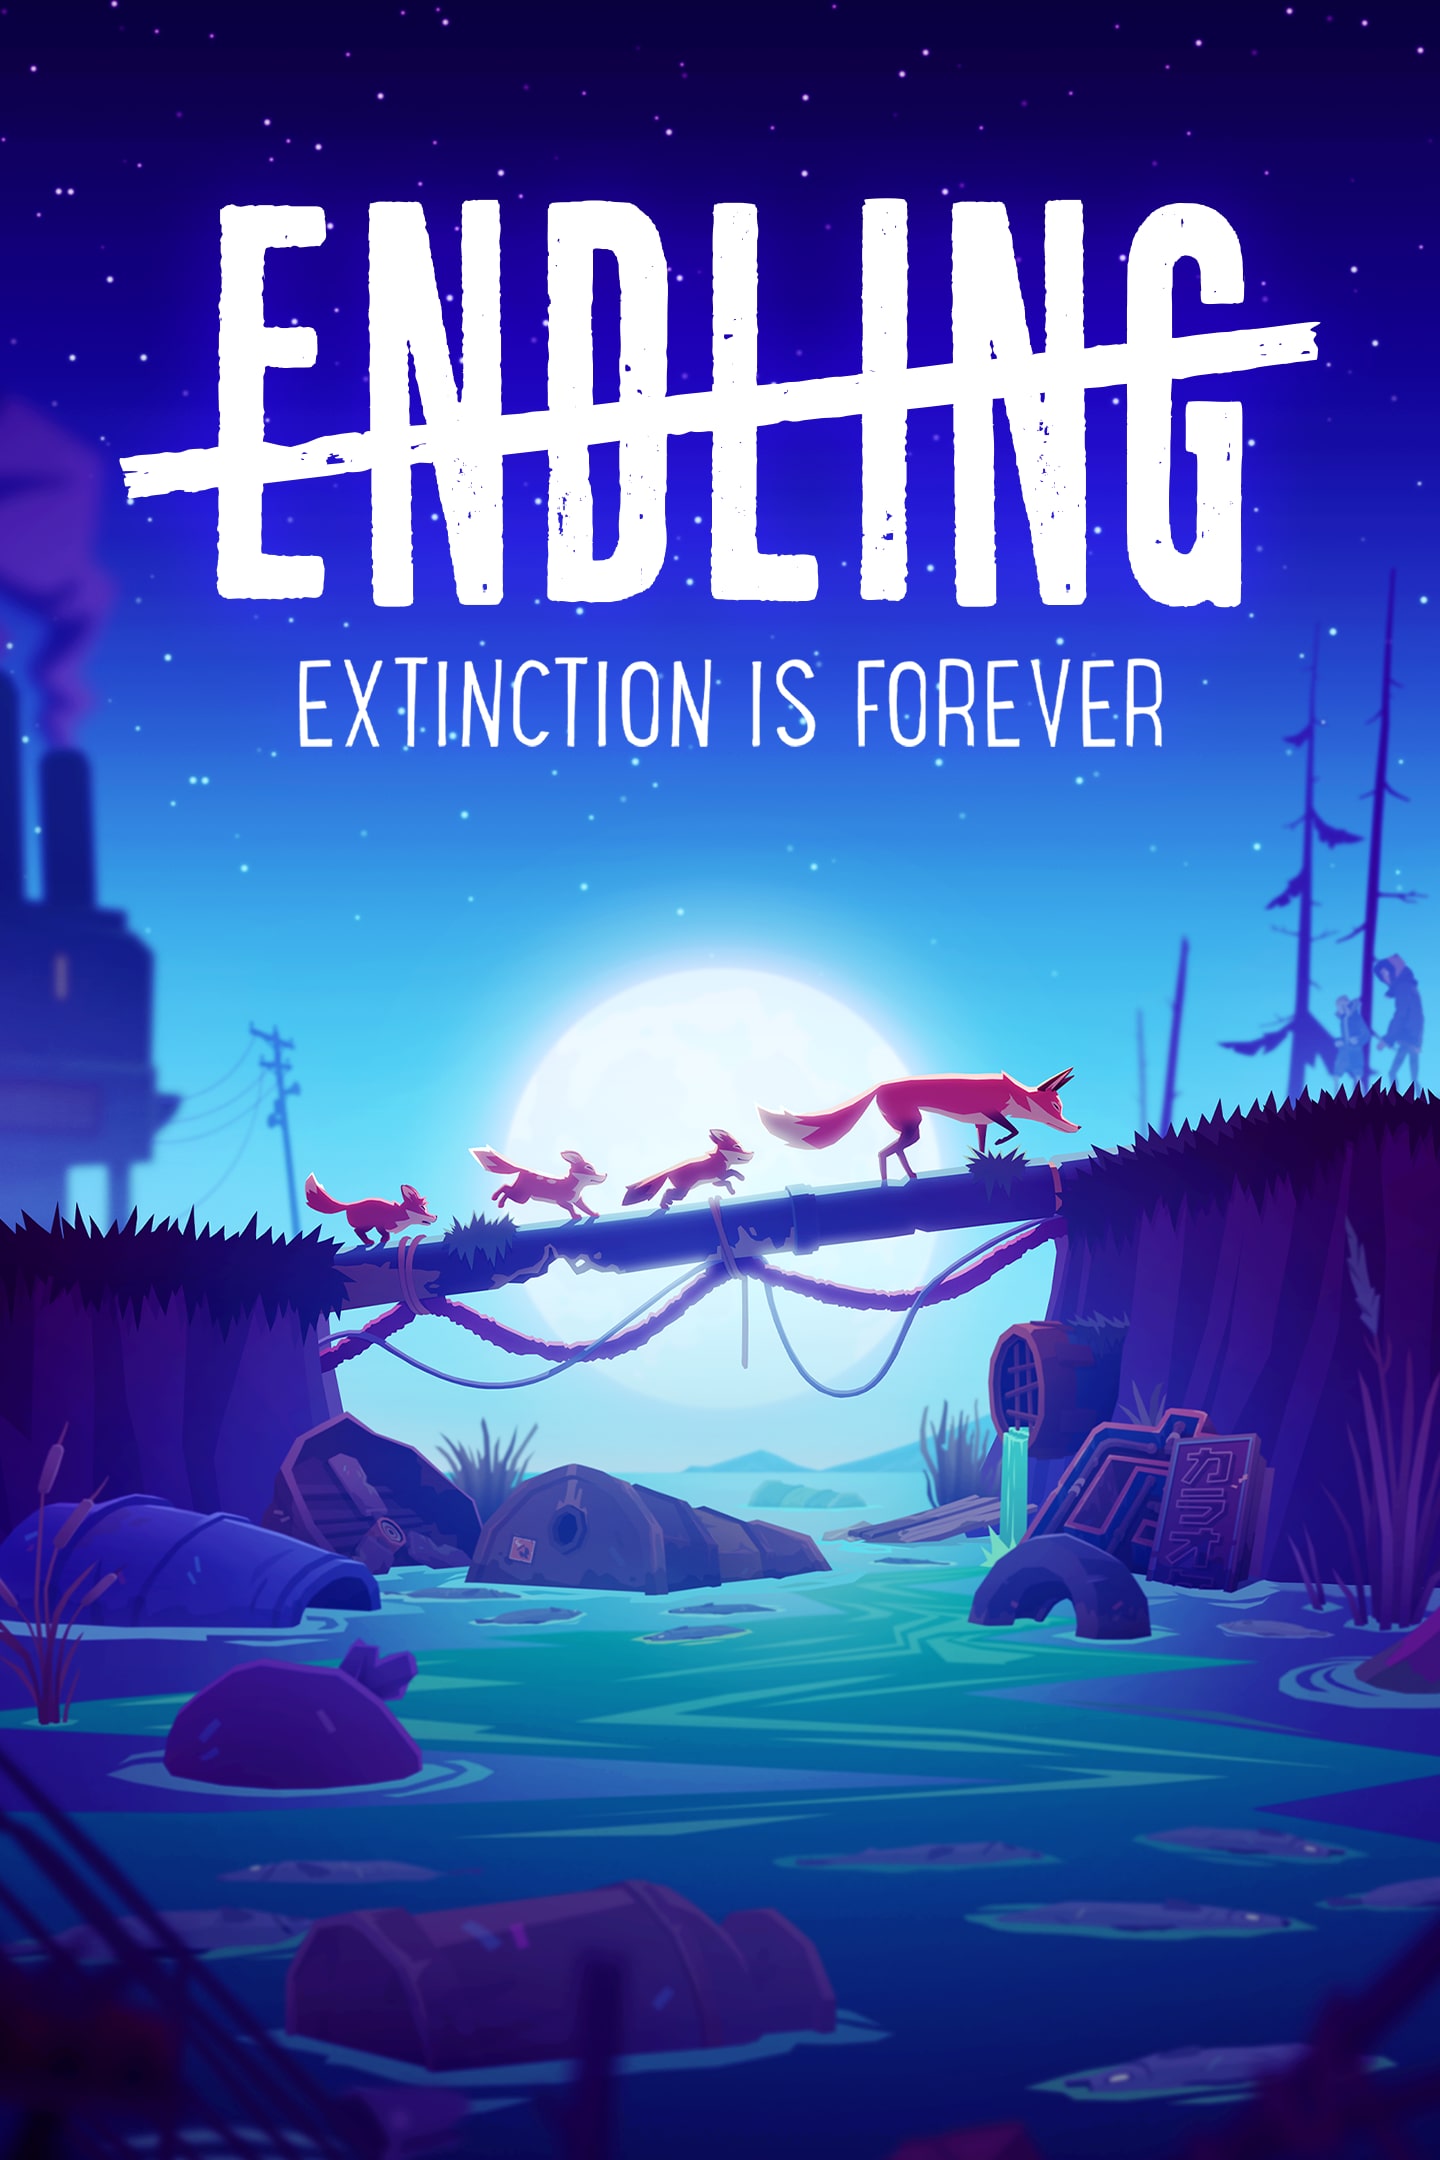 jaquette du jeu vidéo Endling: Extinction is forever